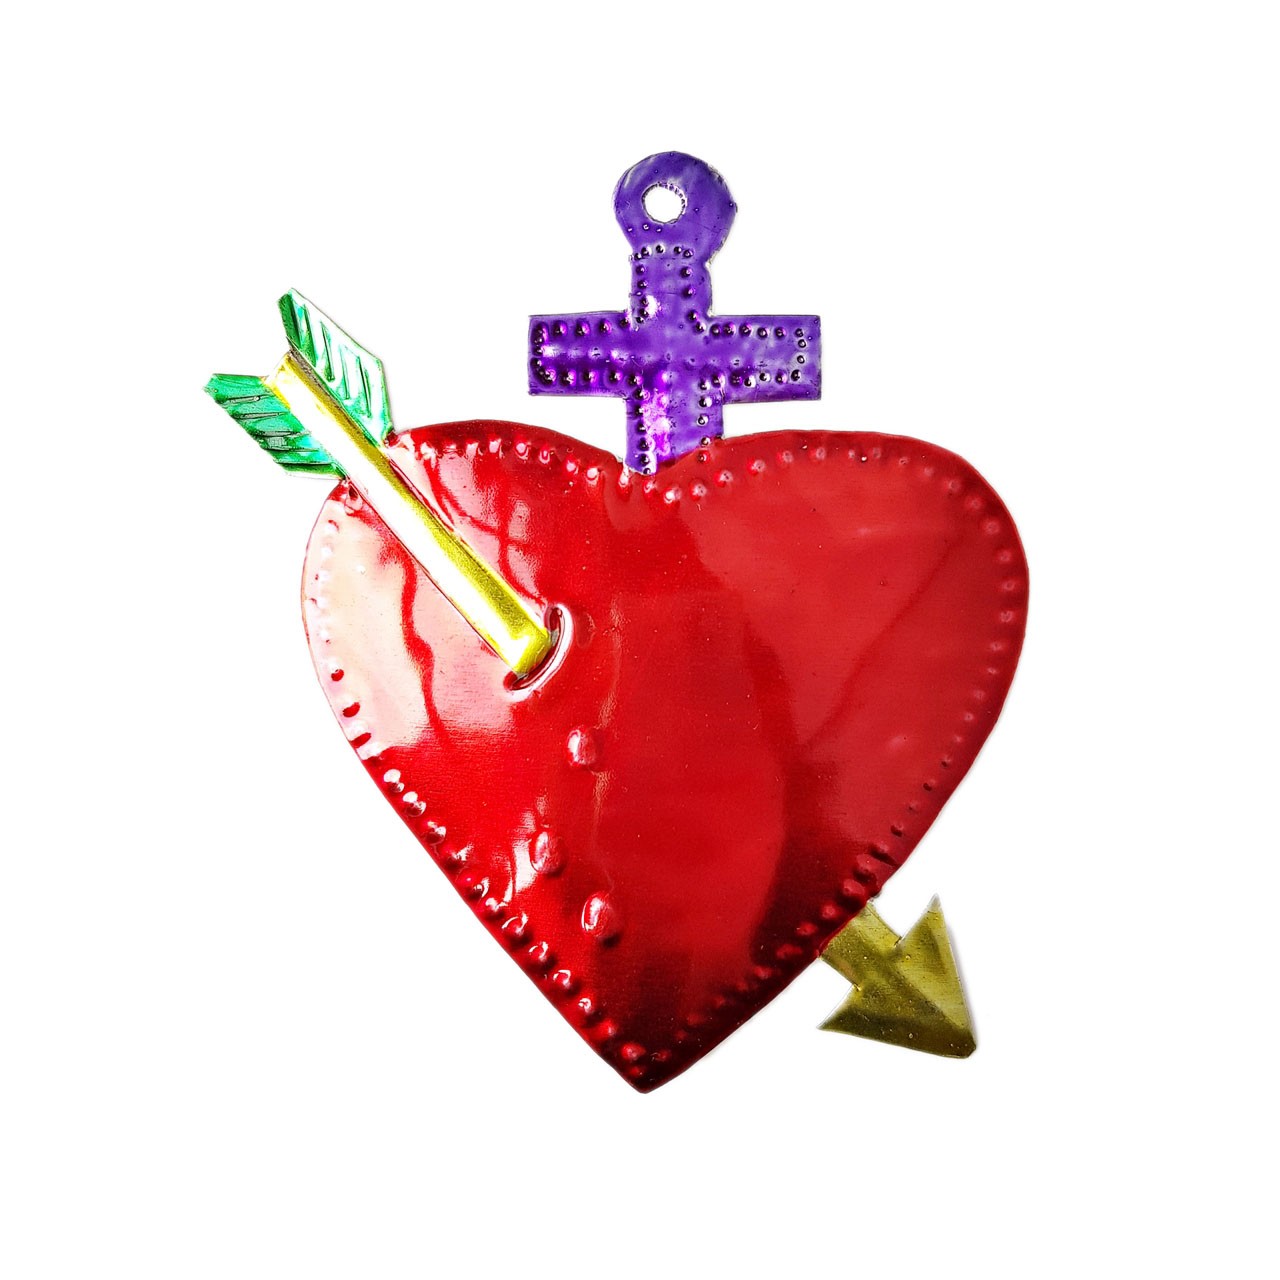 Pierced sacred heart - Heart with arrow tattoo style - Casa Frida